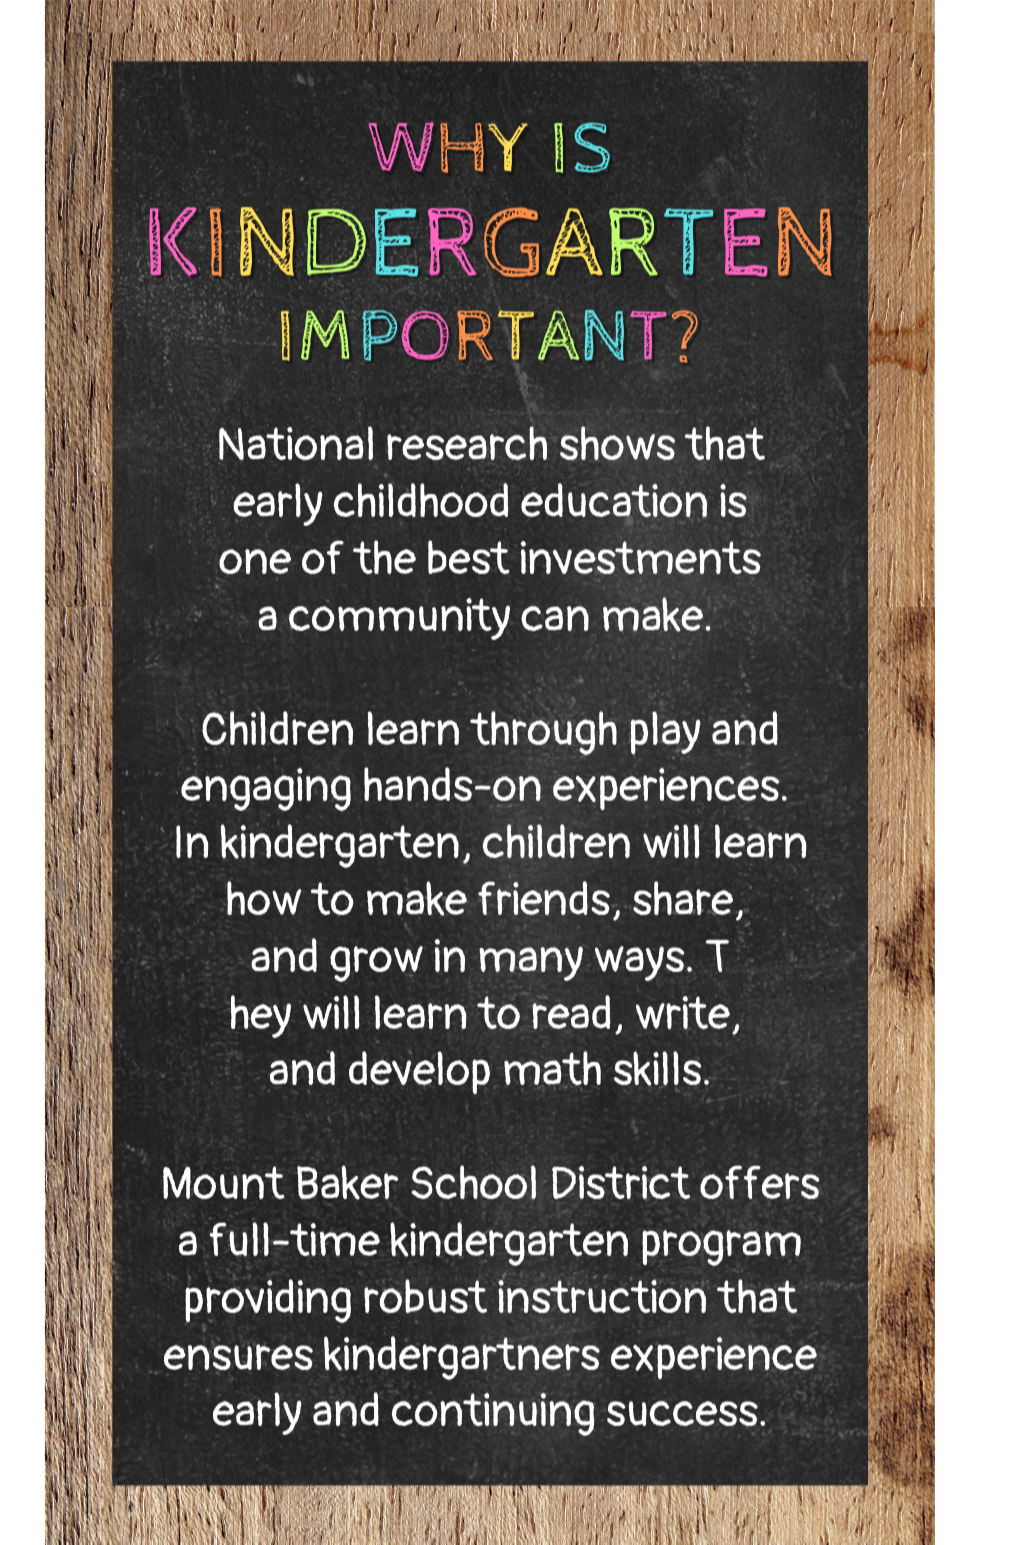 Why is Kindergarten Important?